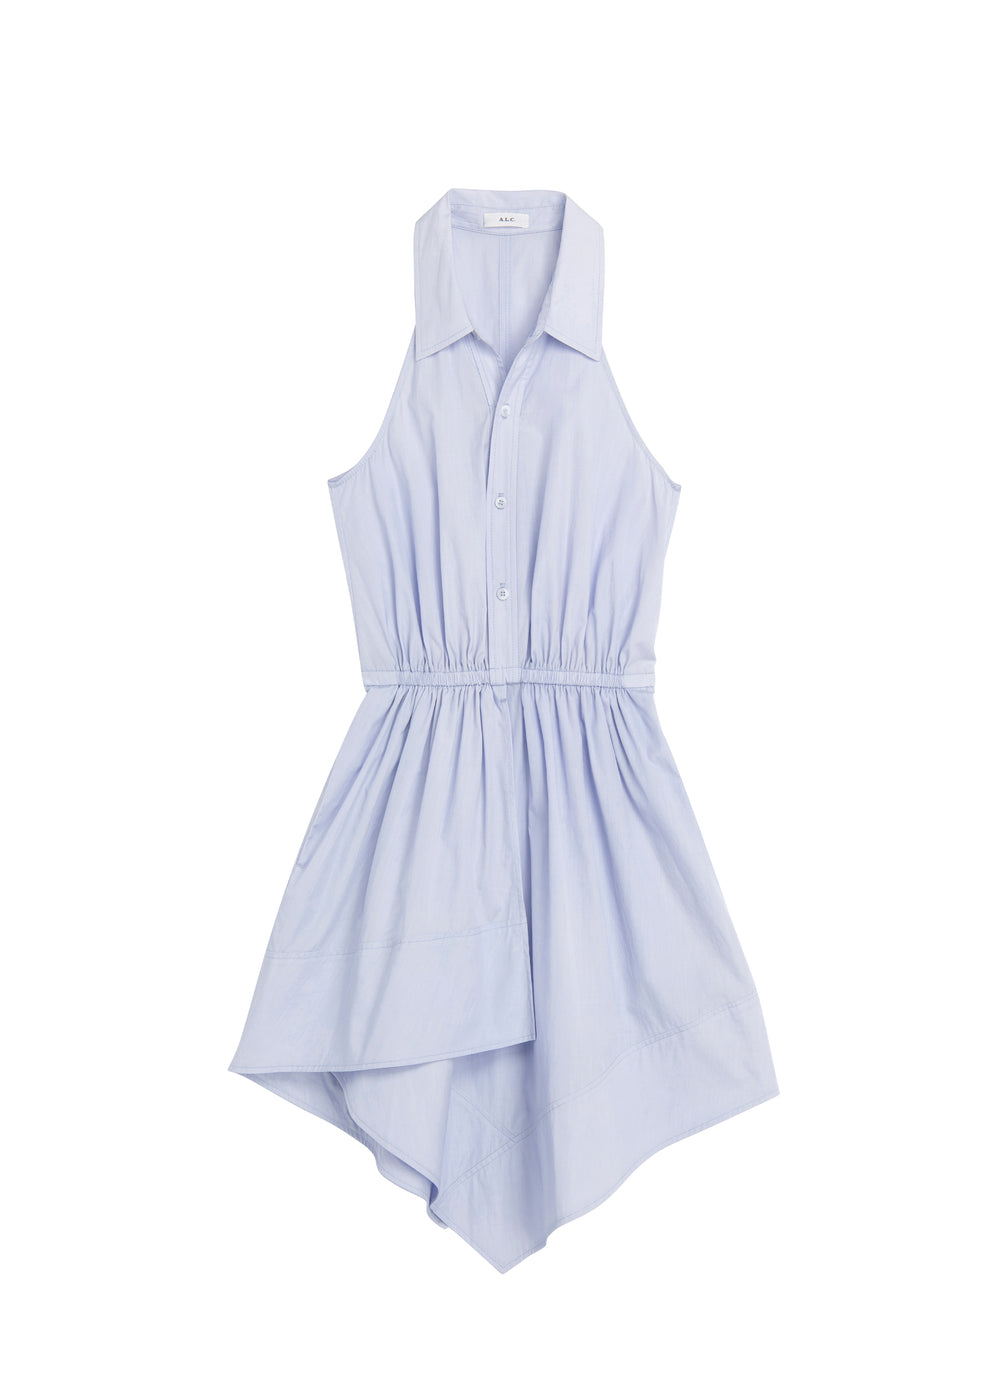 flatlay of light blue sleeveless collared mini dress